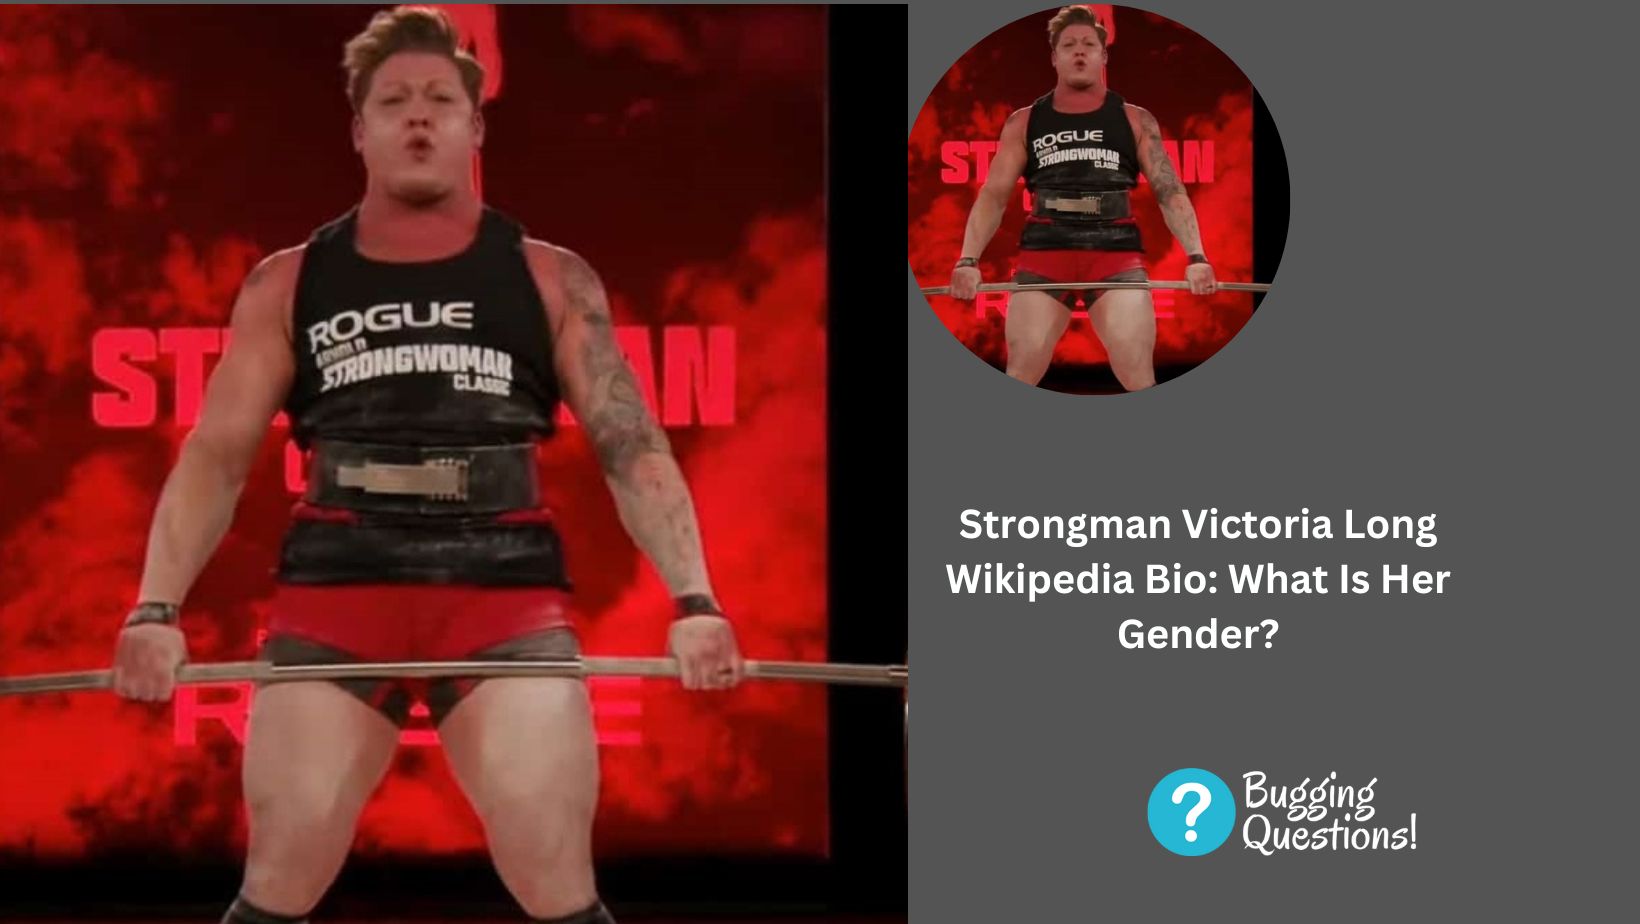 Strongman Victoria Long Wikipedia Bio: What Is Her Gender?